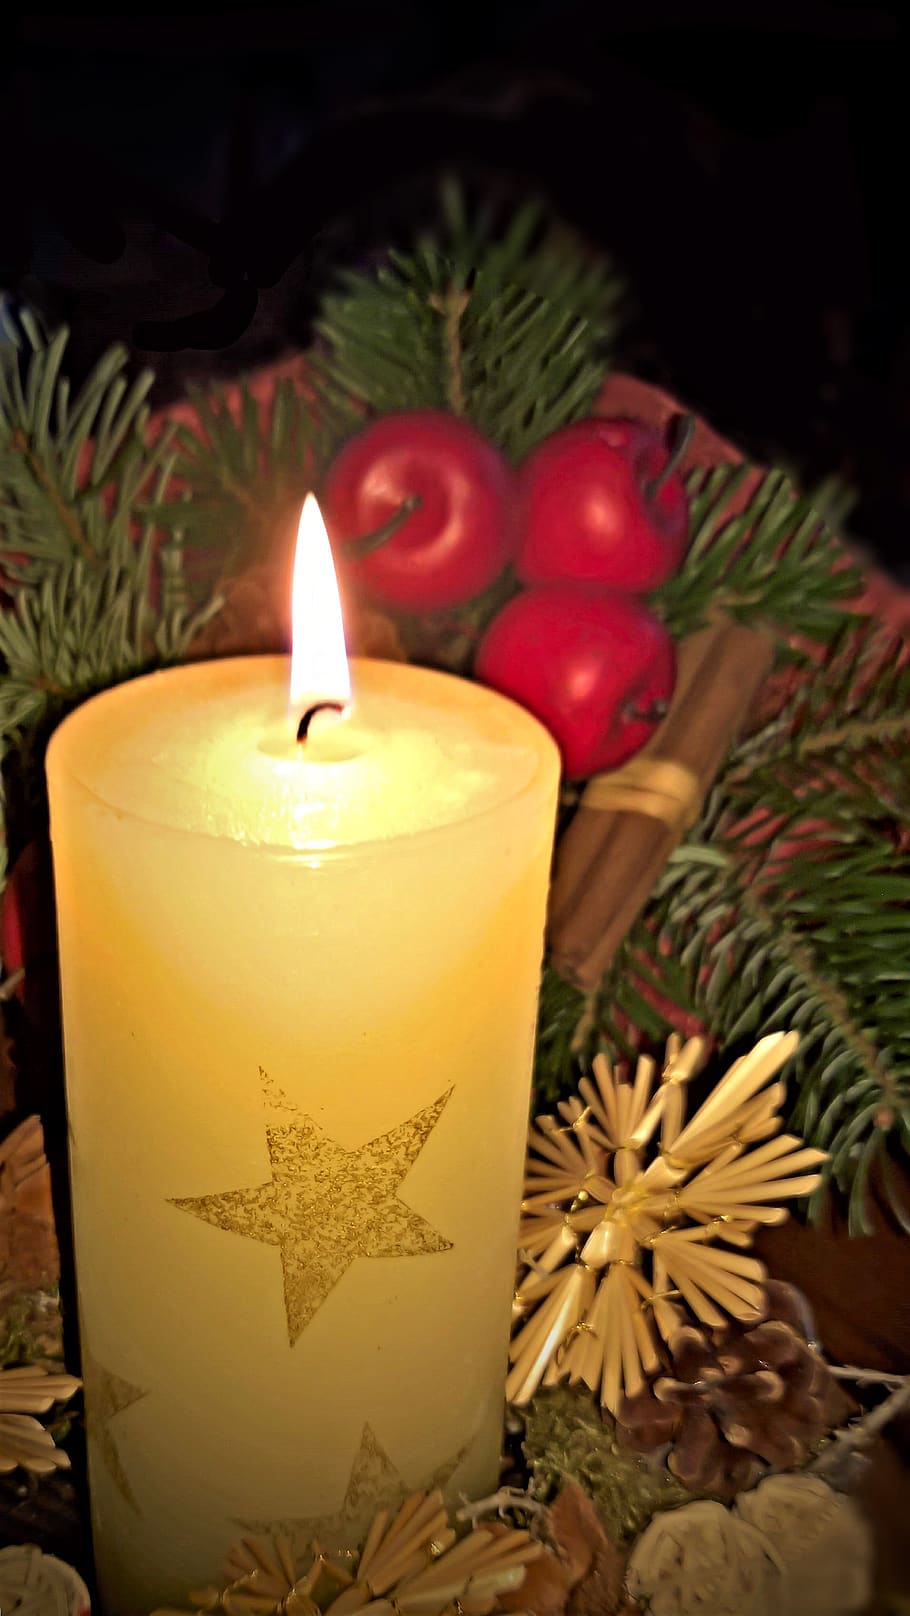 light, candle, advent, christmas, burning flame, candlelight, warm, festive, decoration, strohstern